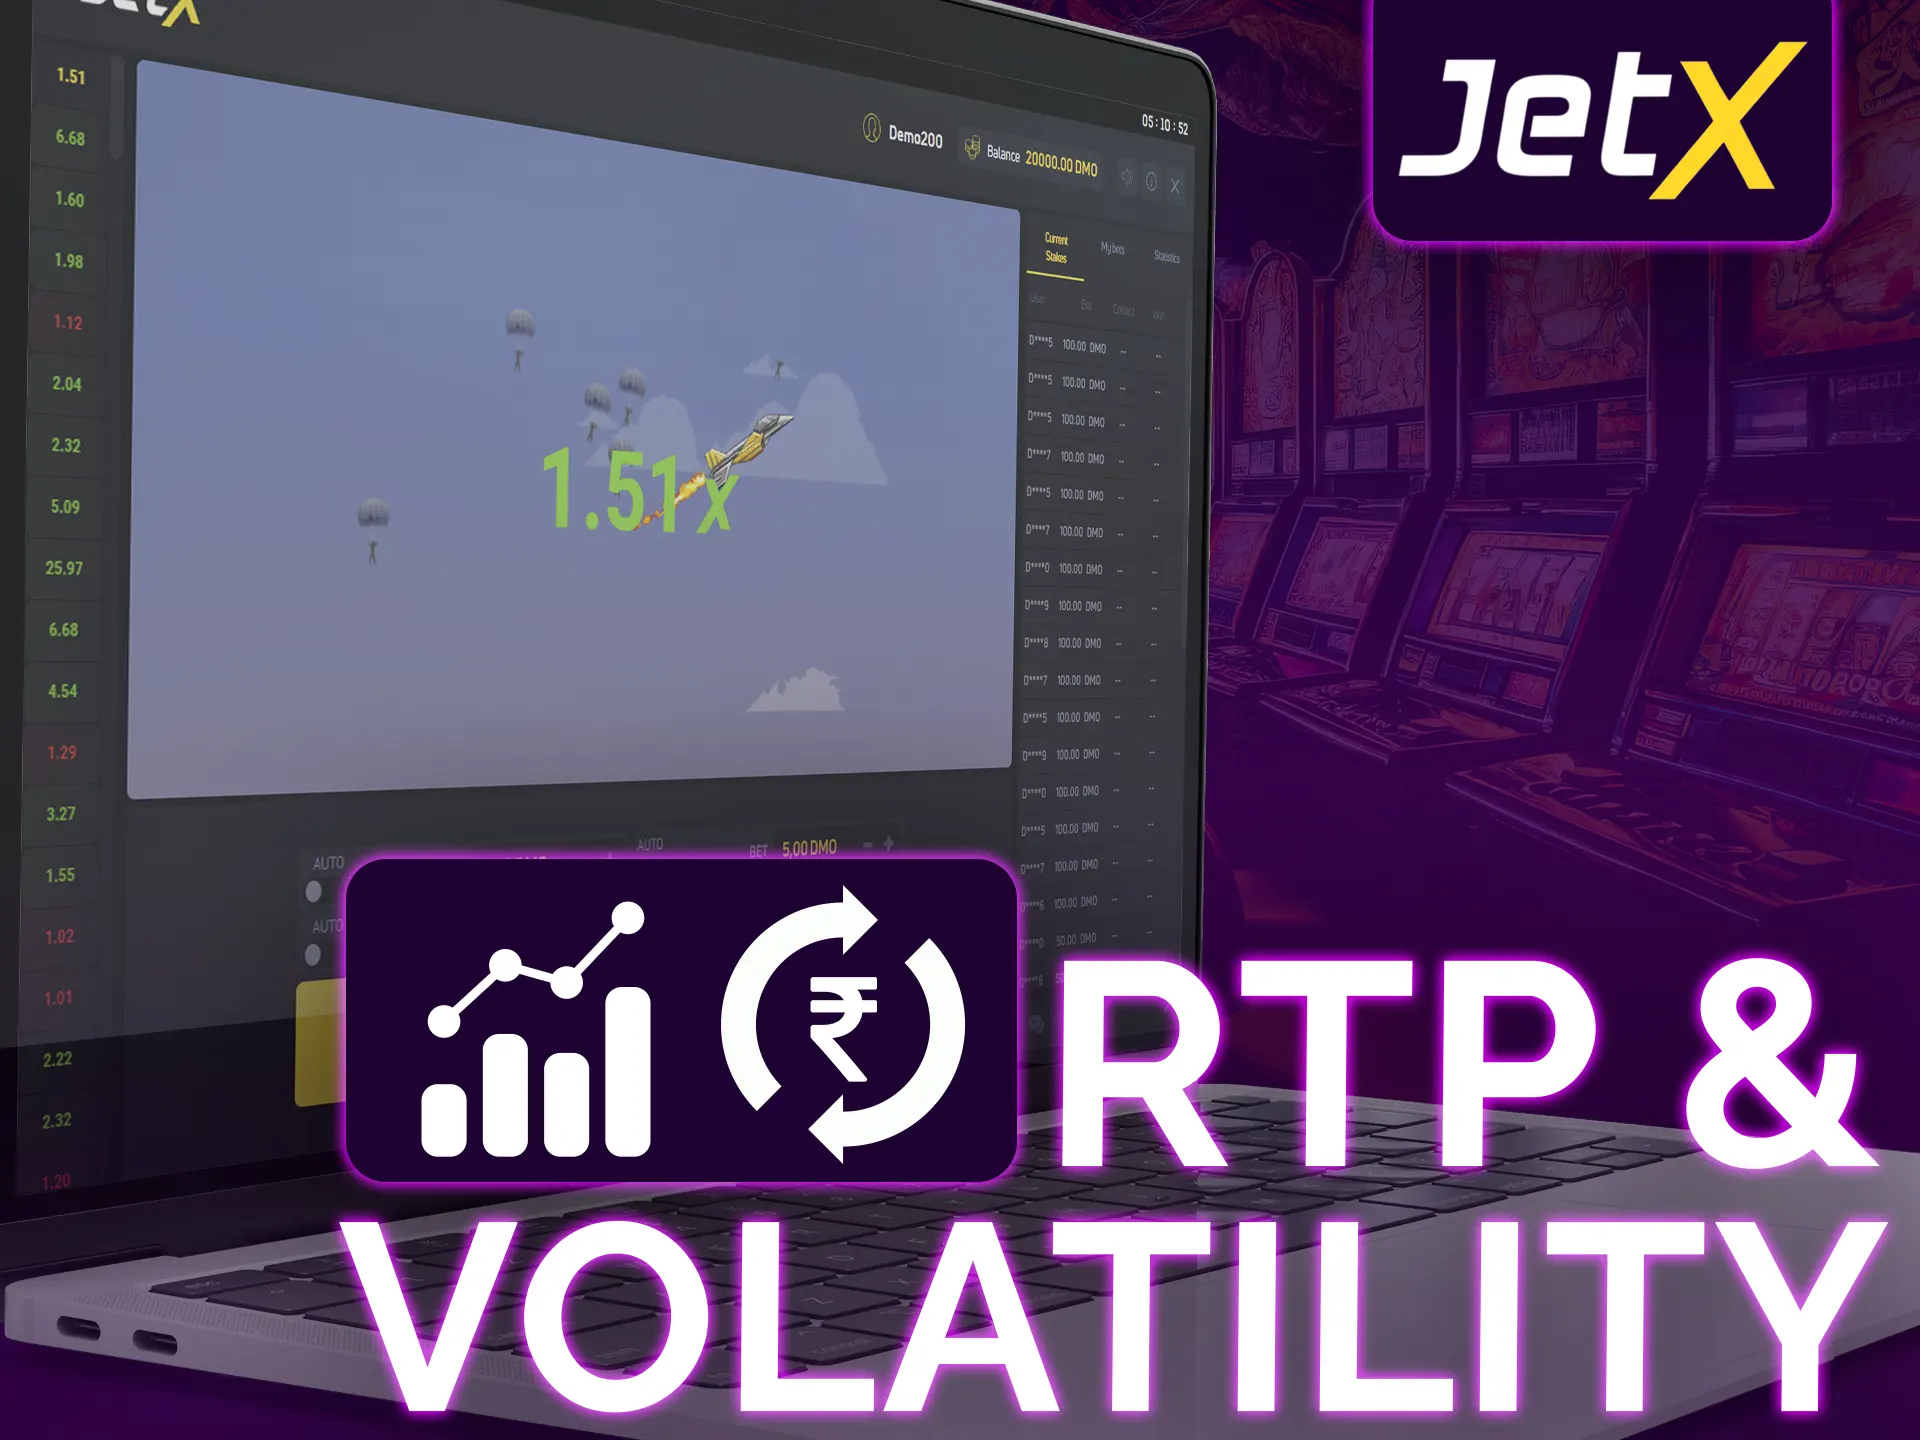 Jet X offers high RTP and balanced volatility.